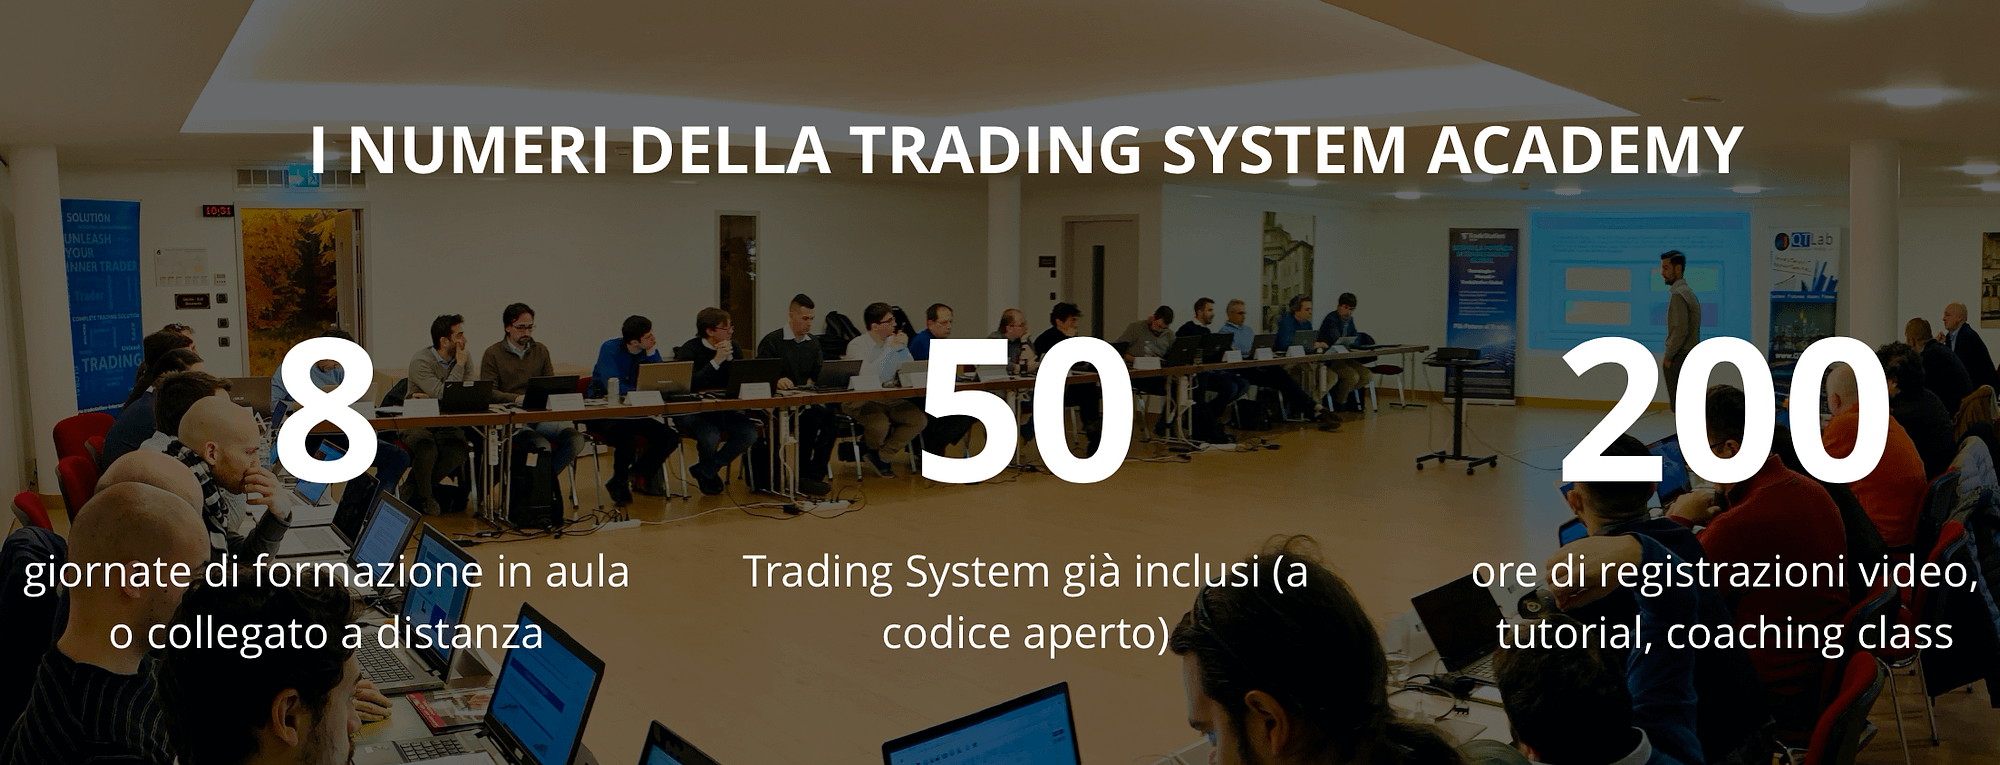 Trading system academy, diventa imprenditore trader professionista del trading